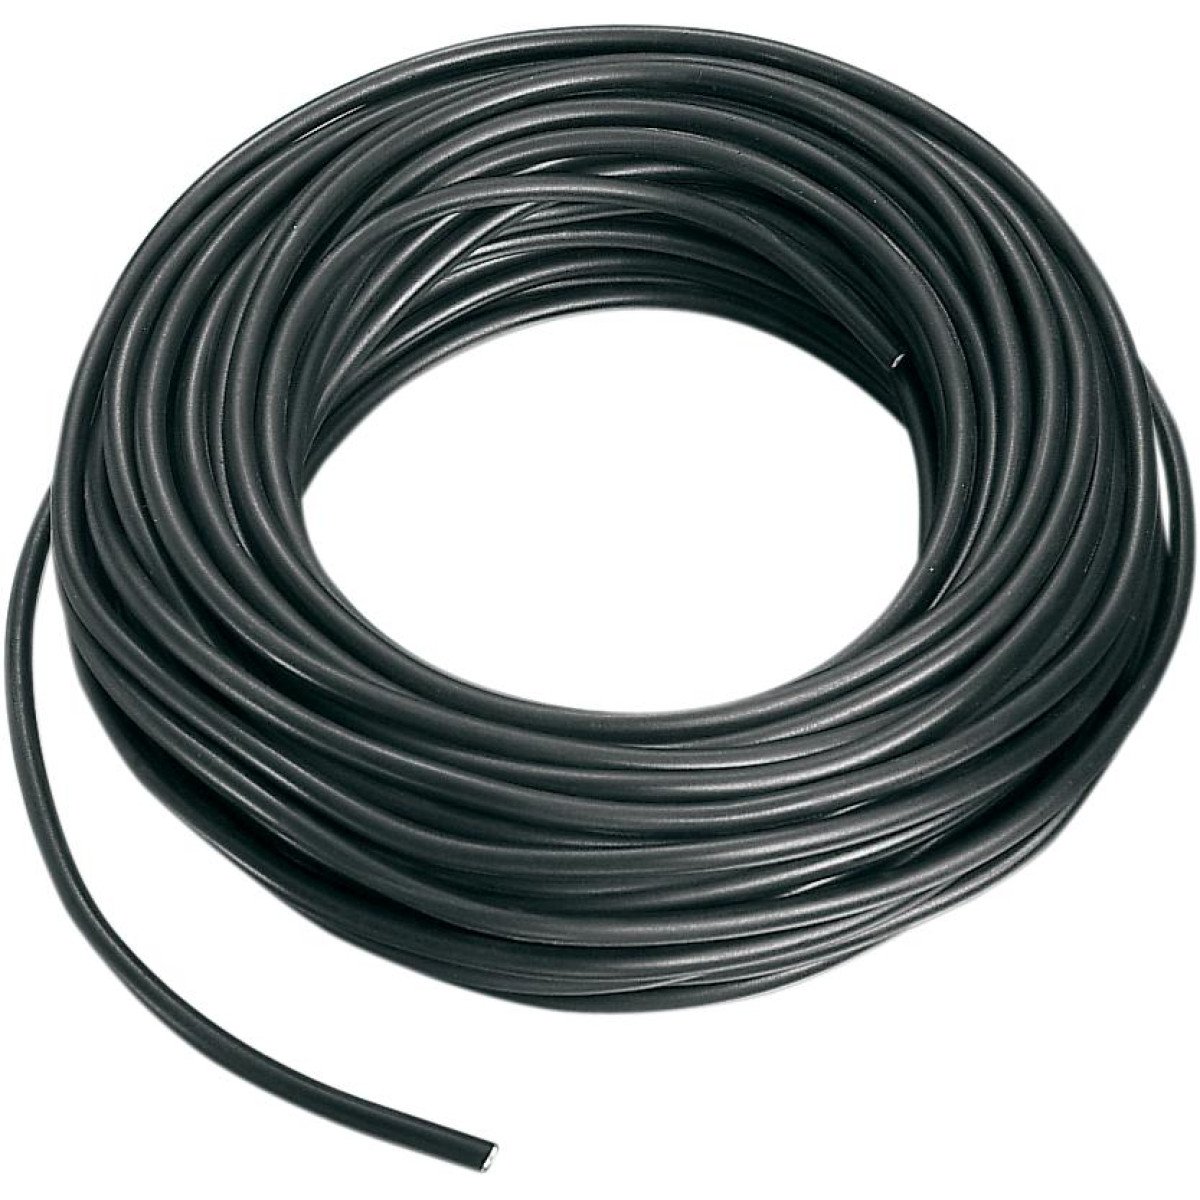 Parts Unlimited Spark Plug Wire  30.5 m, Black